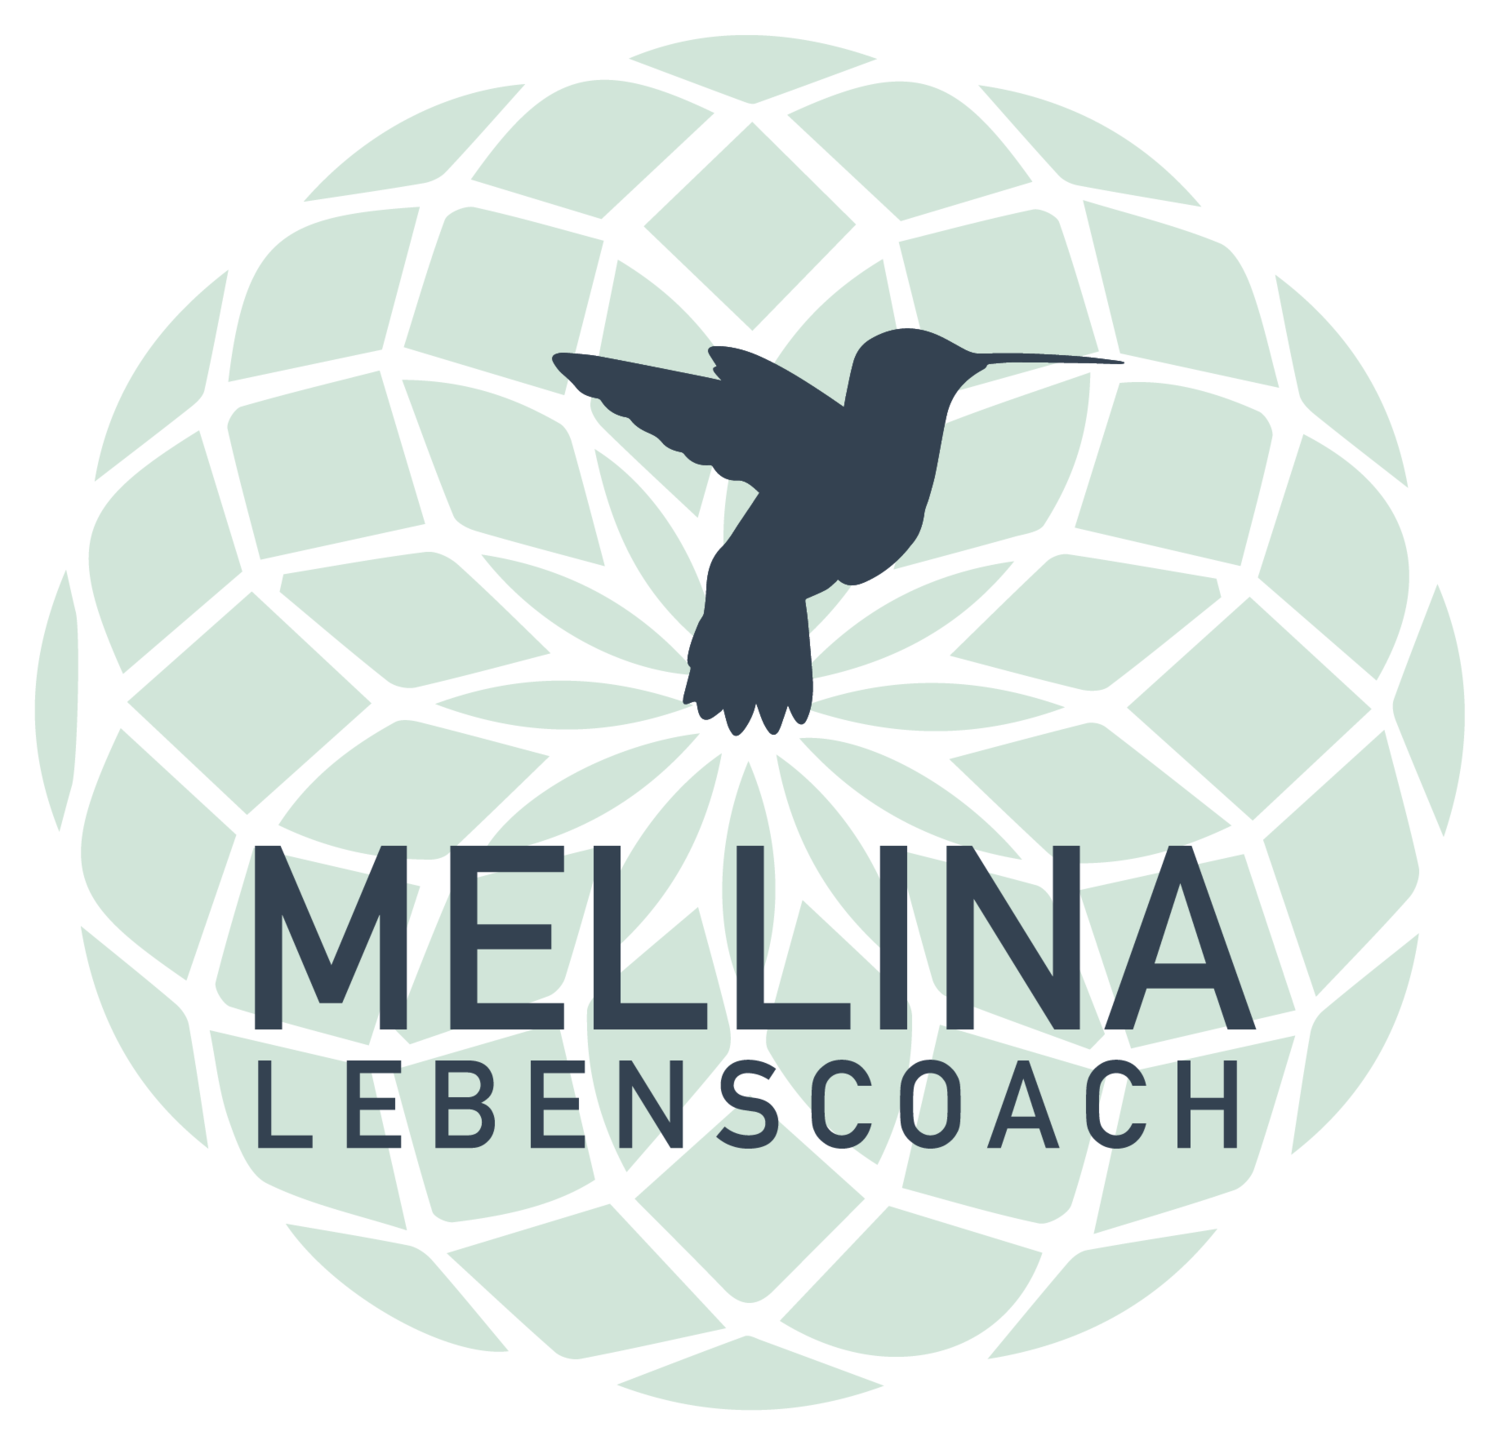 Mellina